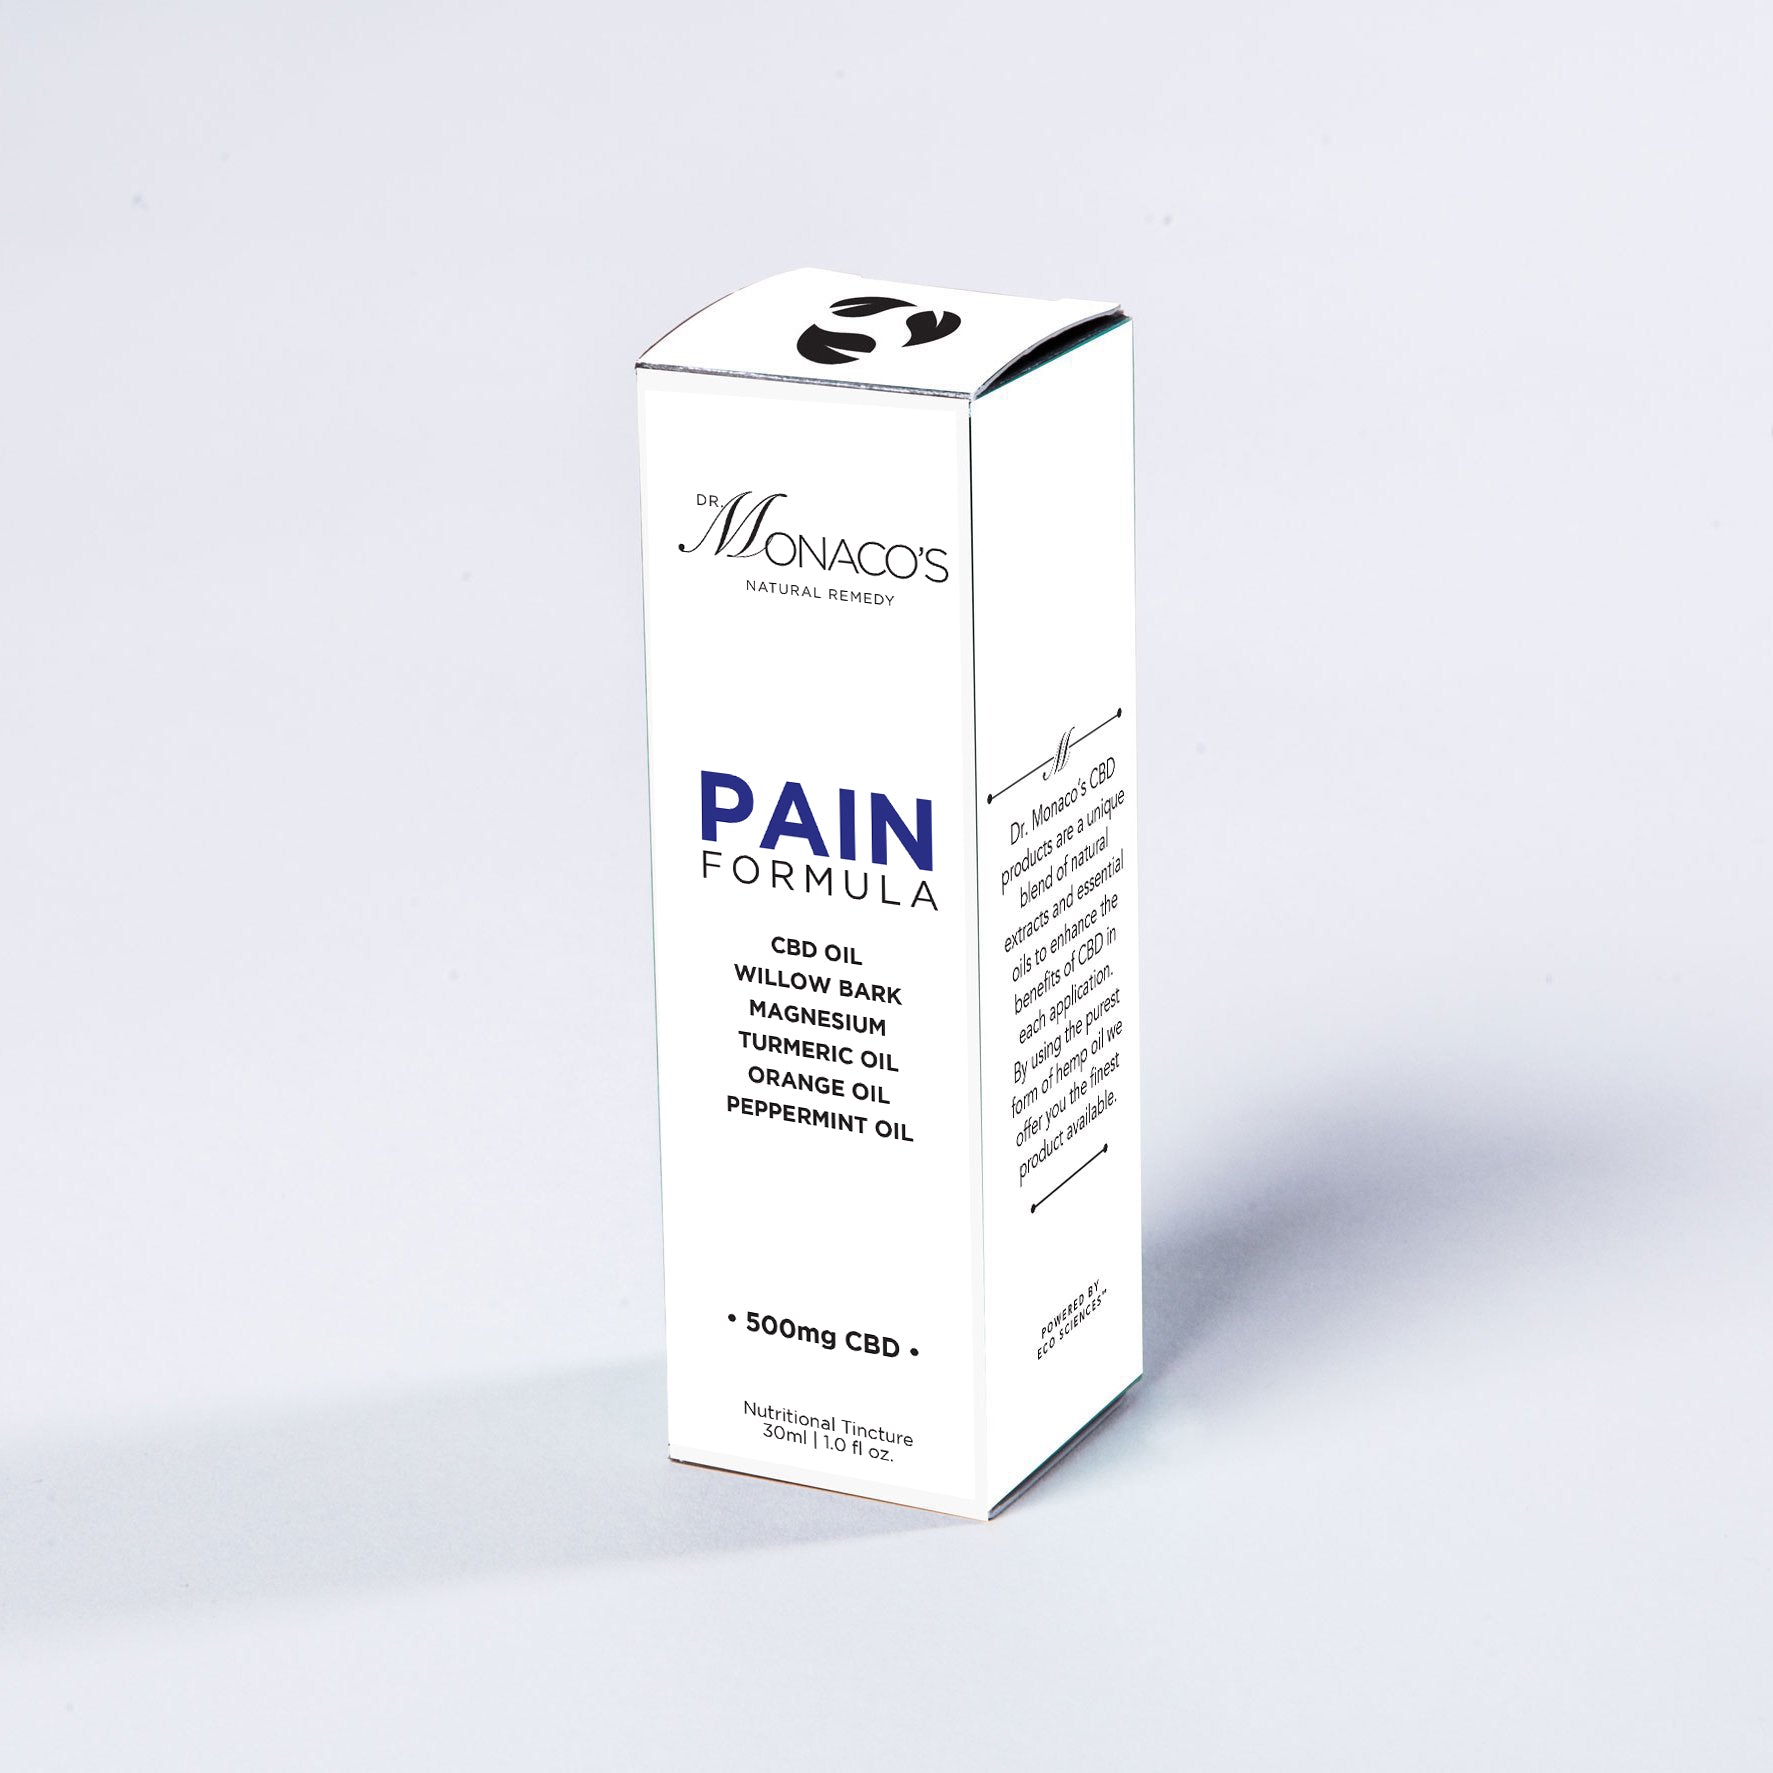 Pain Formula CBD Oil (Nutritional Tincture 500mg CBD)